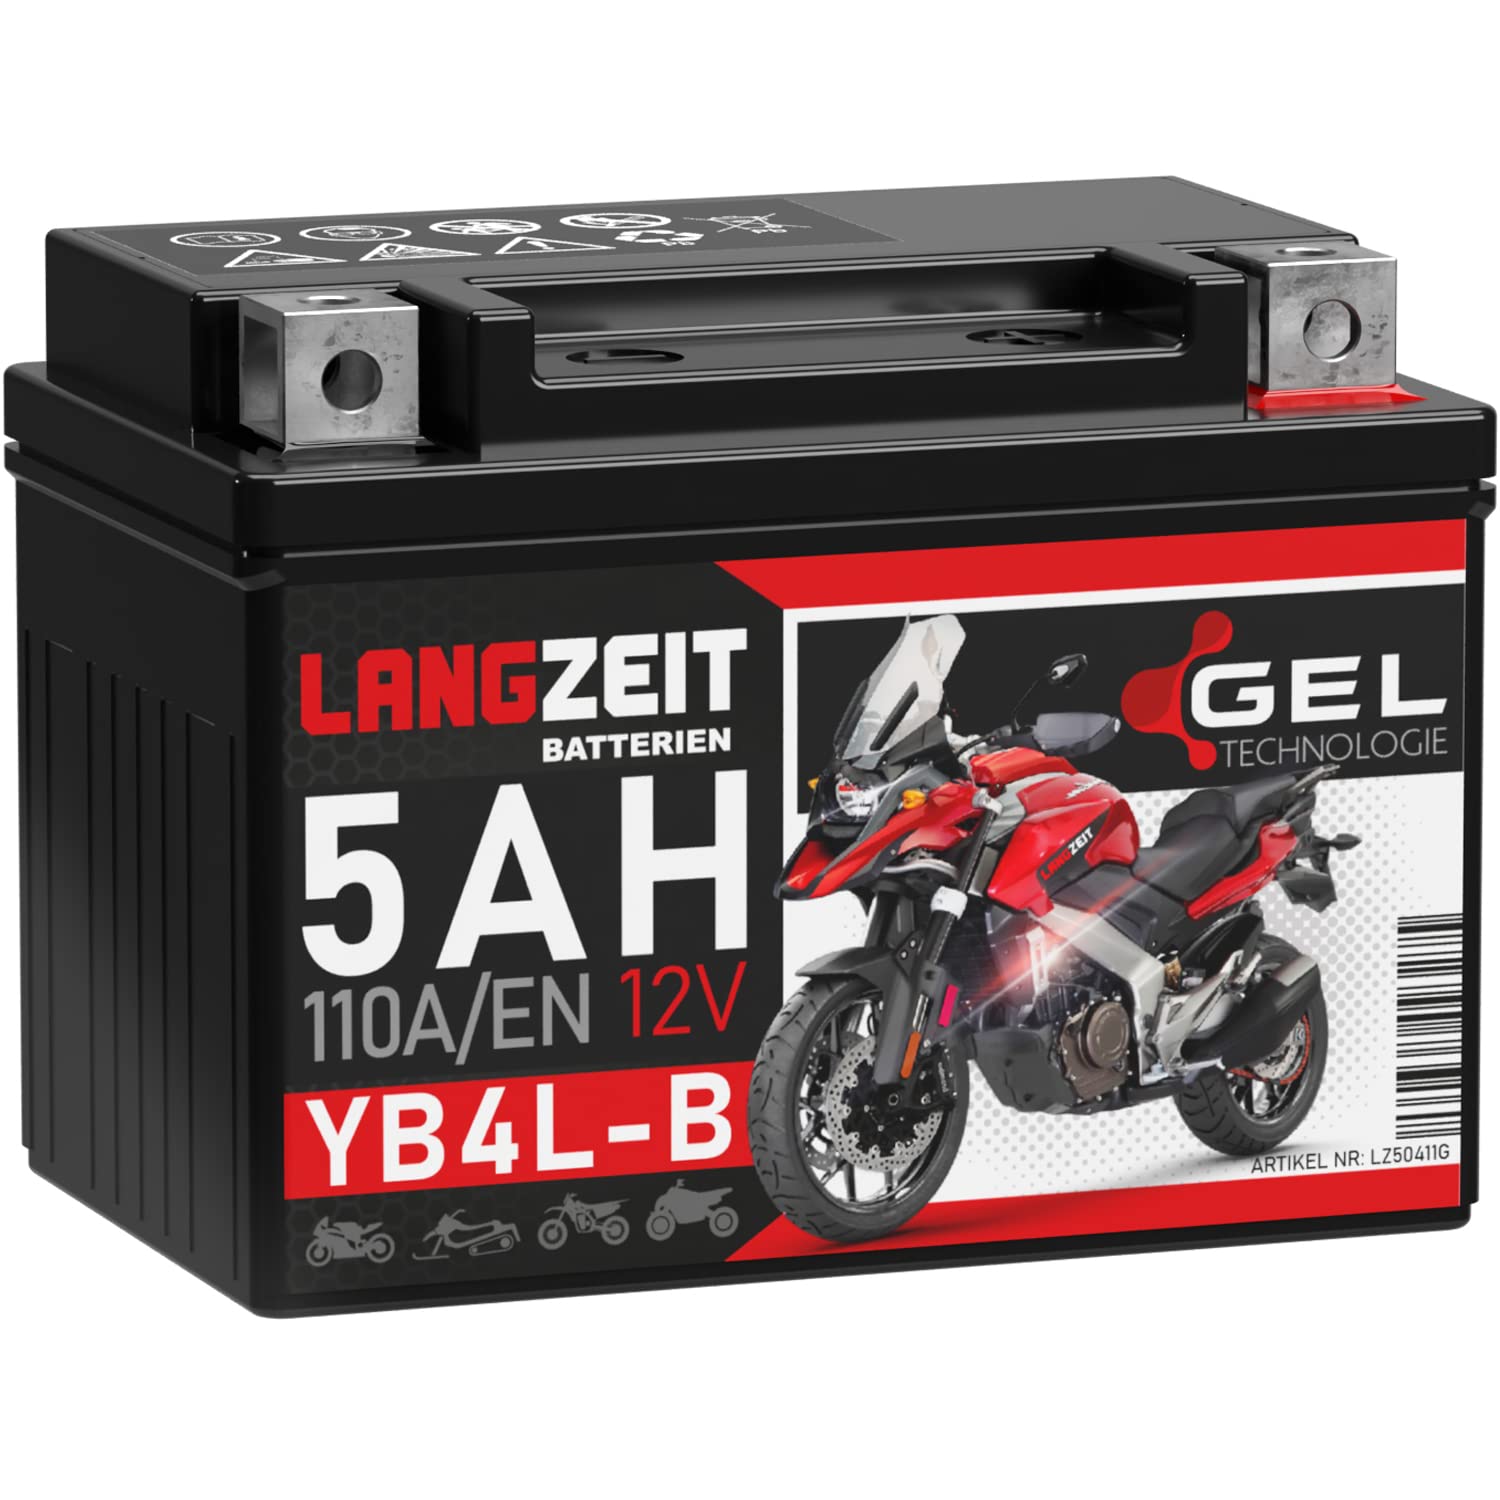 LANGZEIT YB4L-B GEL Roller Batterie 12V 5Ah 110A/EN GEL Batterie 12V Motorradbatterie doppelte Lebensdauer entspricht CB4L-B 50411 12N4-3B YB4L-A ersetzt 4Ah vorgeladen auslaufsicher wartungsfrei von LANGZEIT Batterien